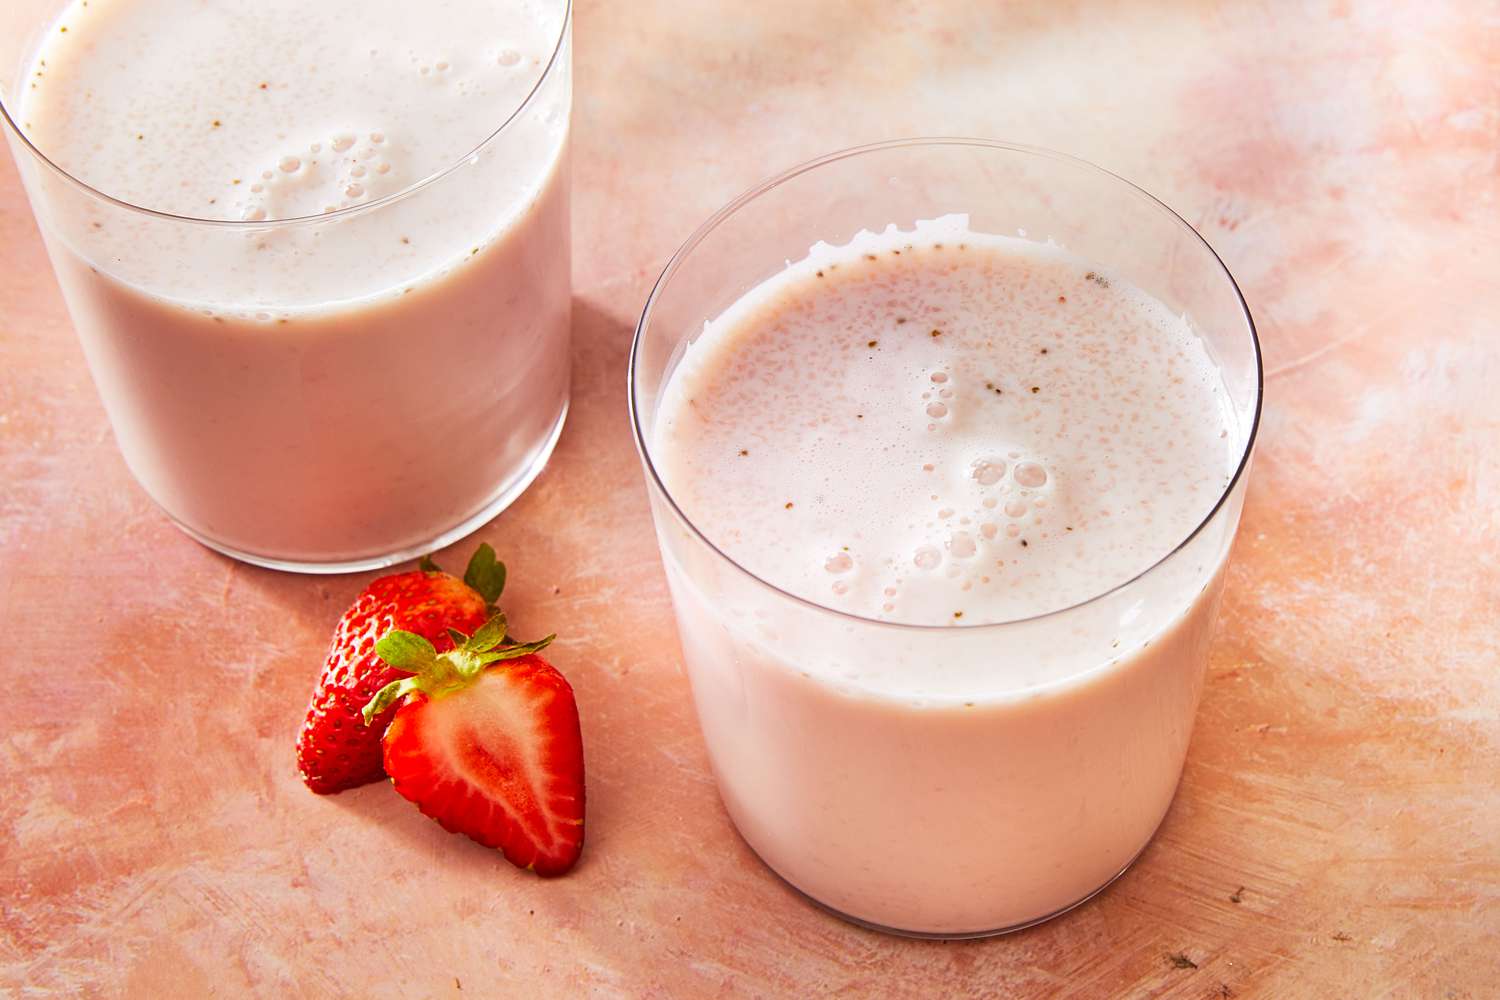 Variations of Strawberry Milk